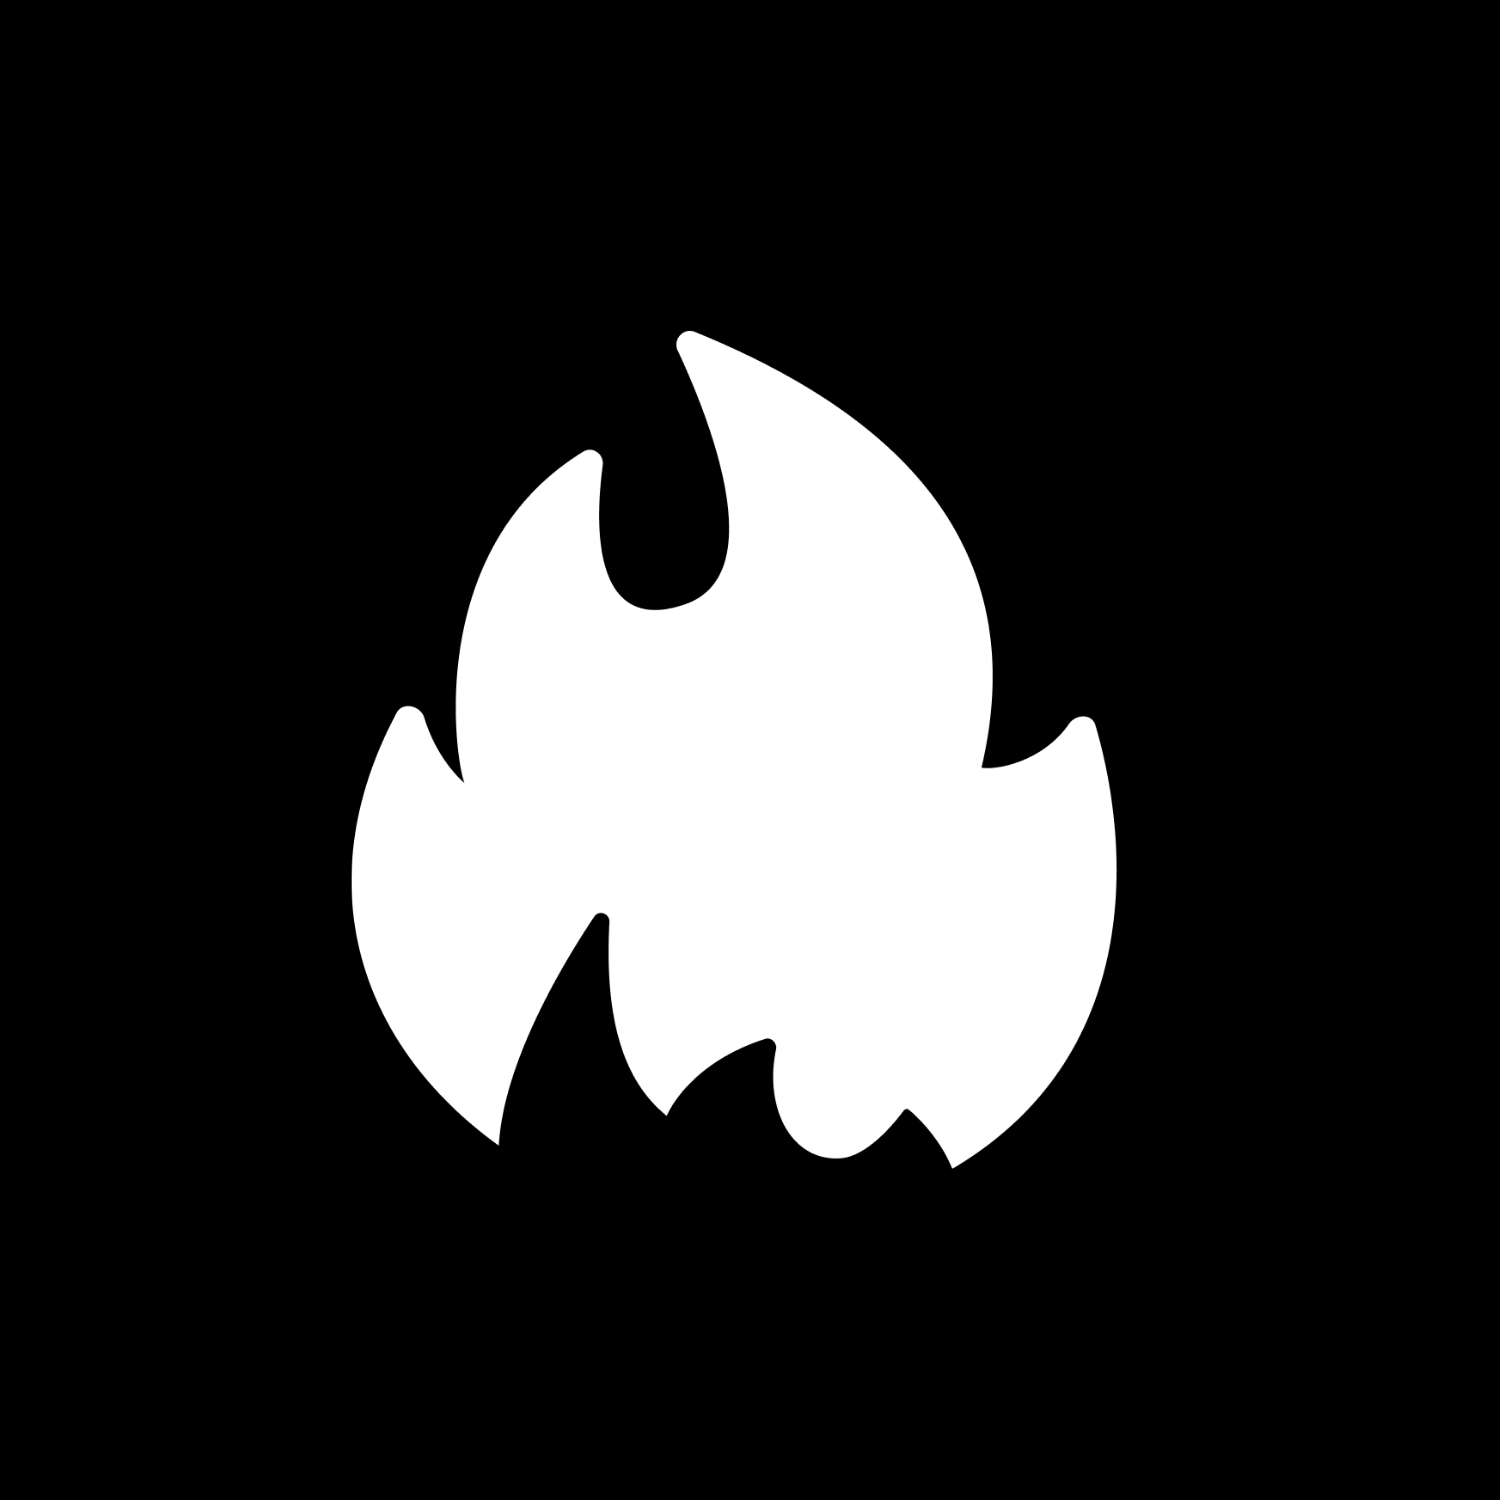 FLAME logo